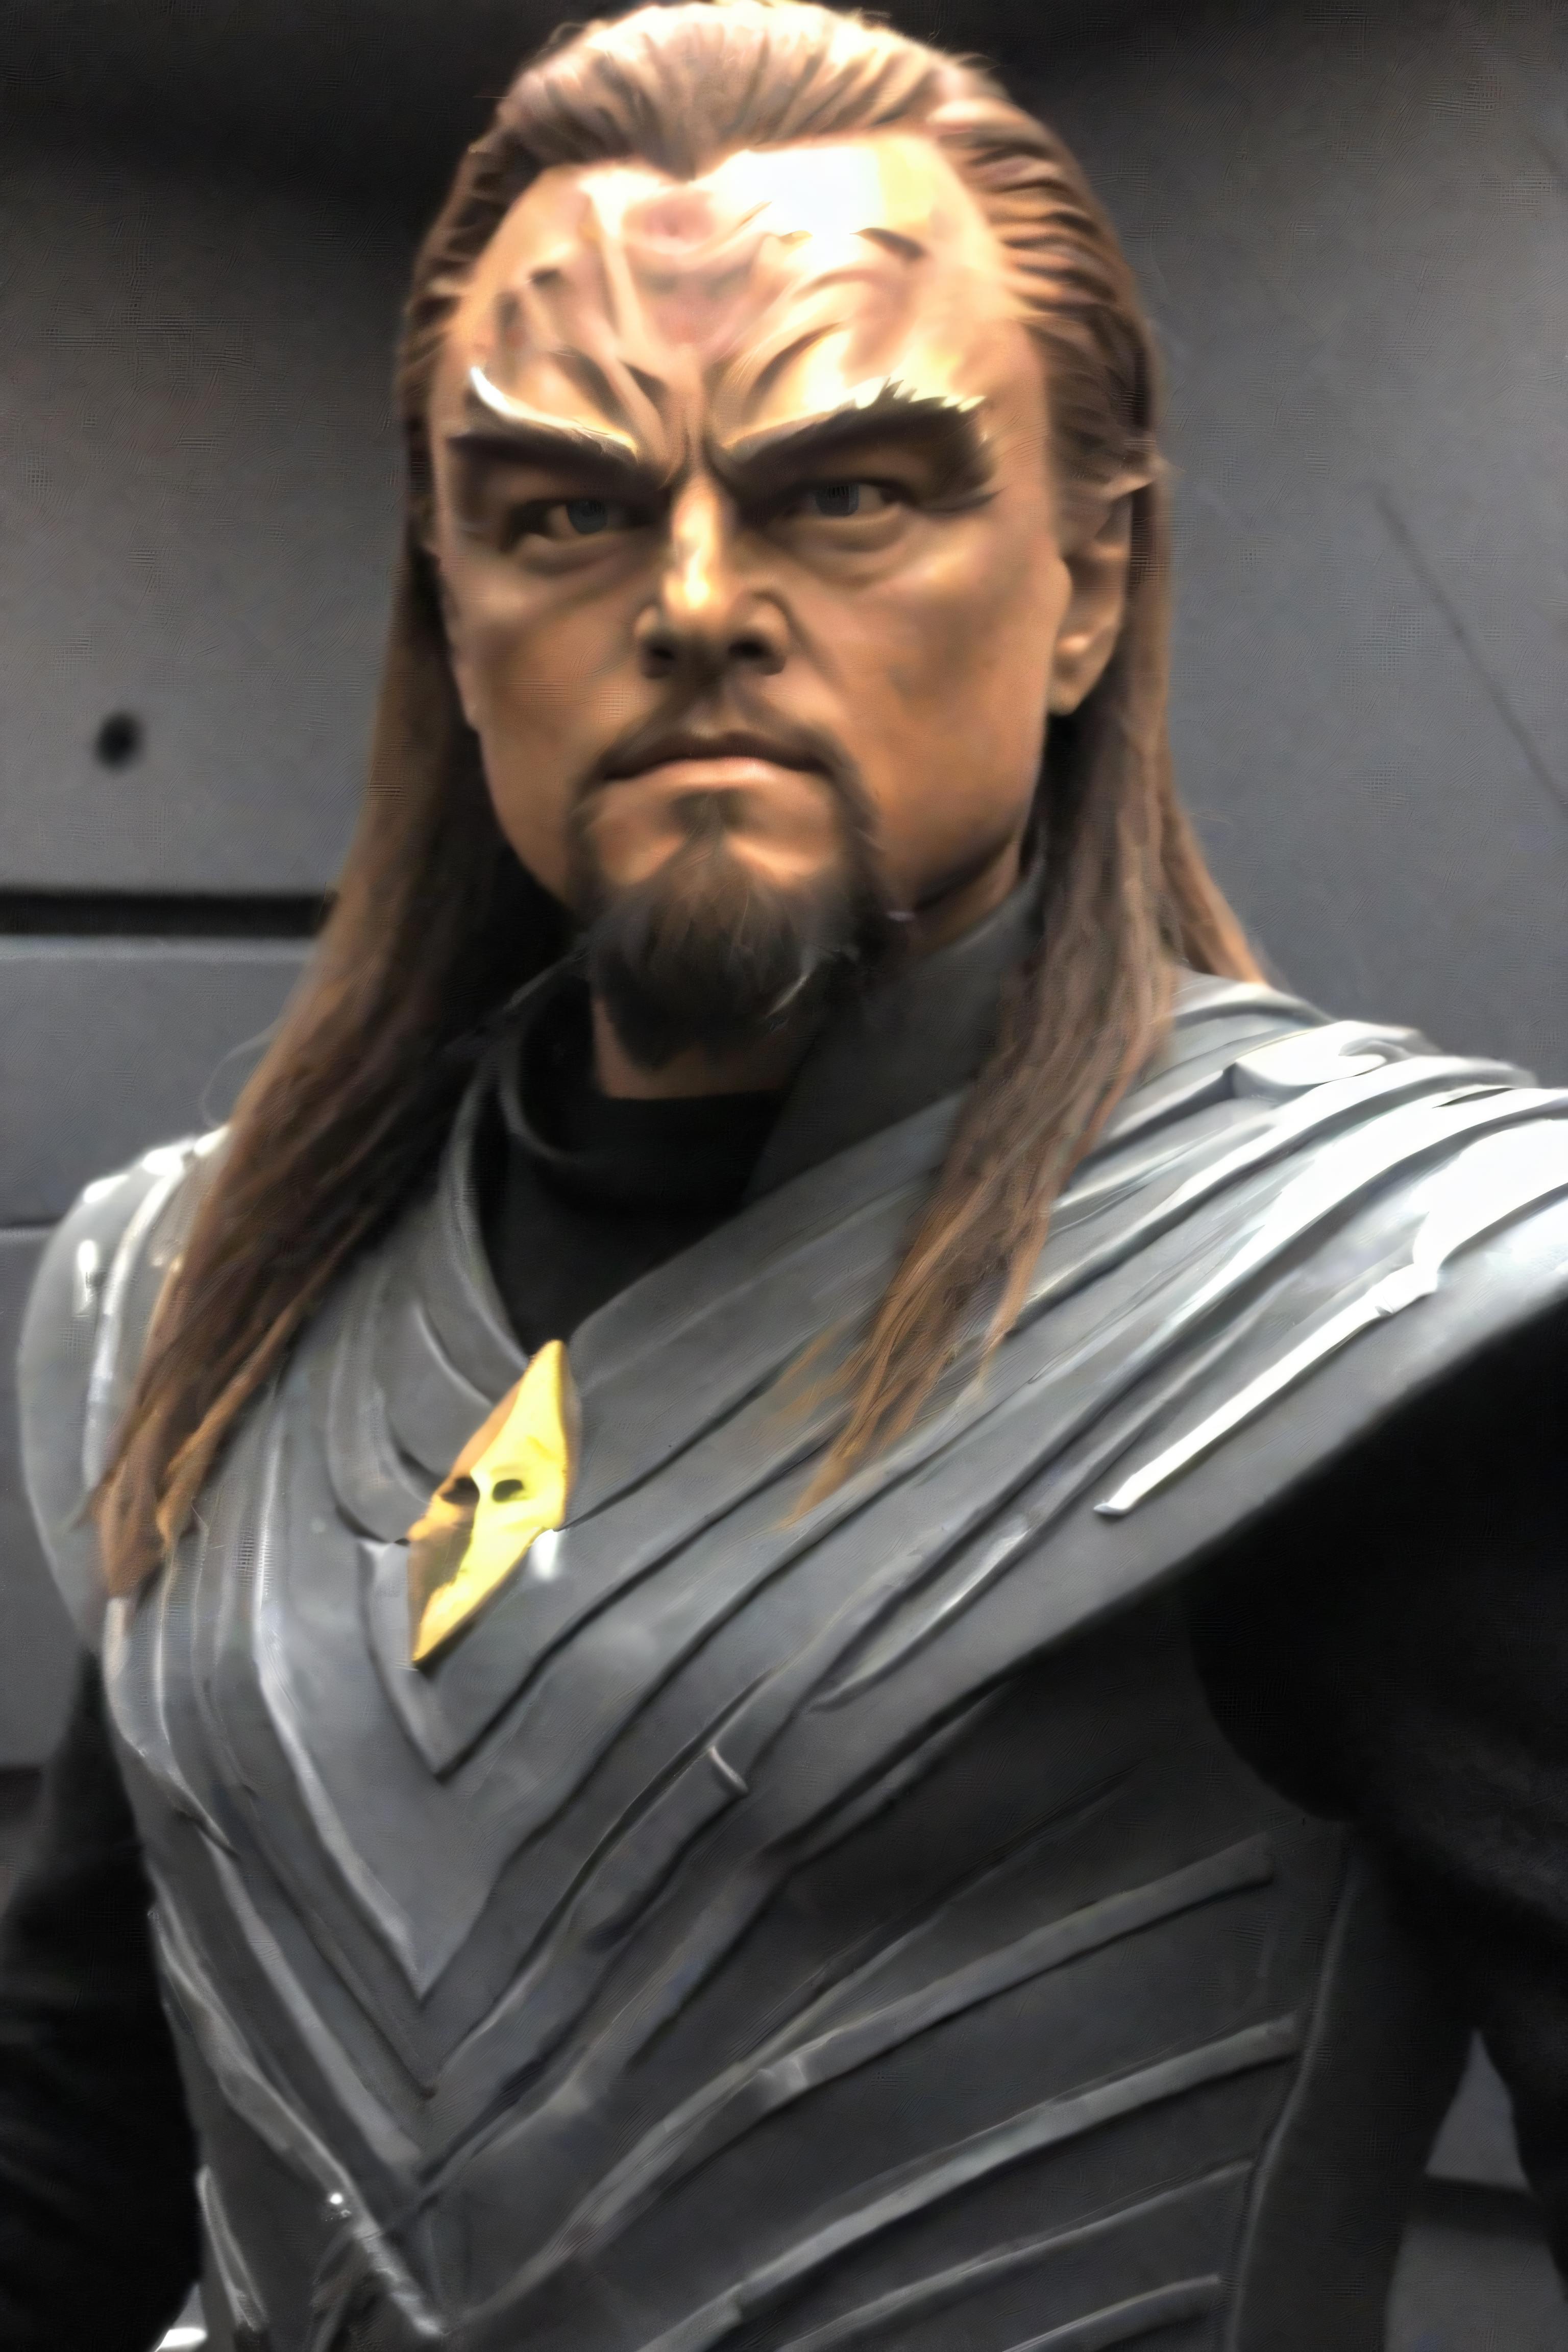 Klingon image by patricktoba